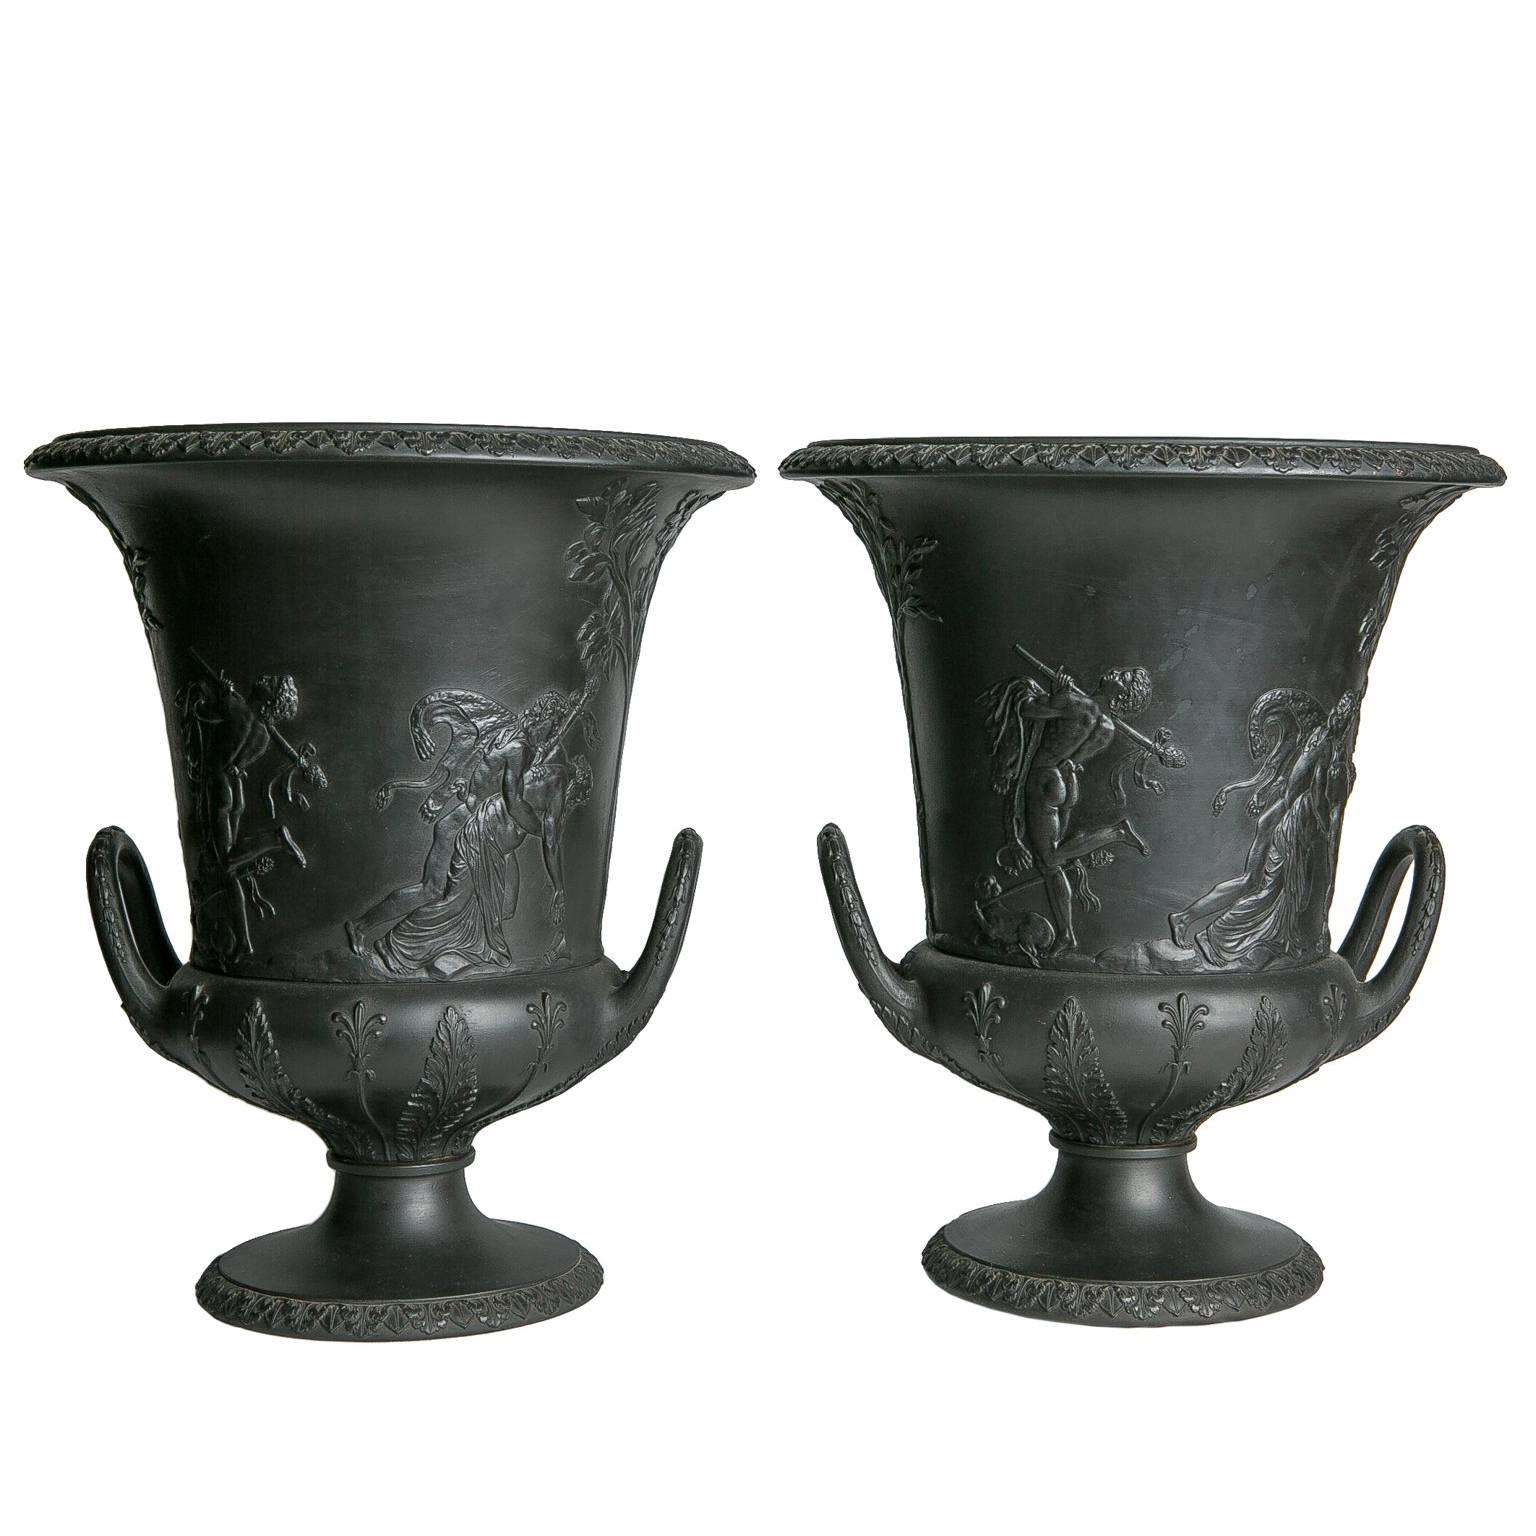 Pair Wedgwood Black Basalt Urns Neoclassical Decoration Made England circa 1840